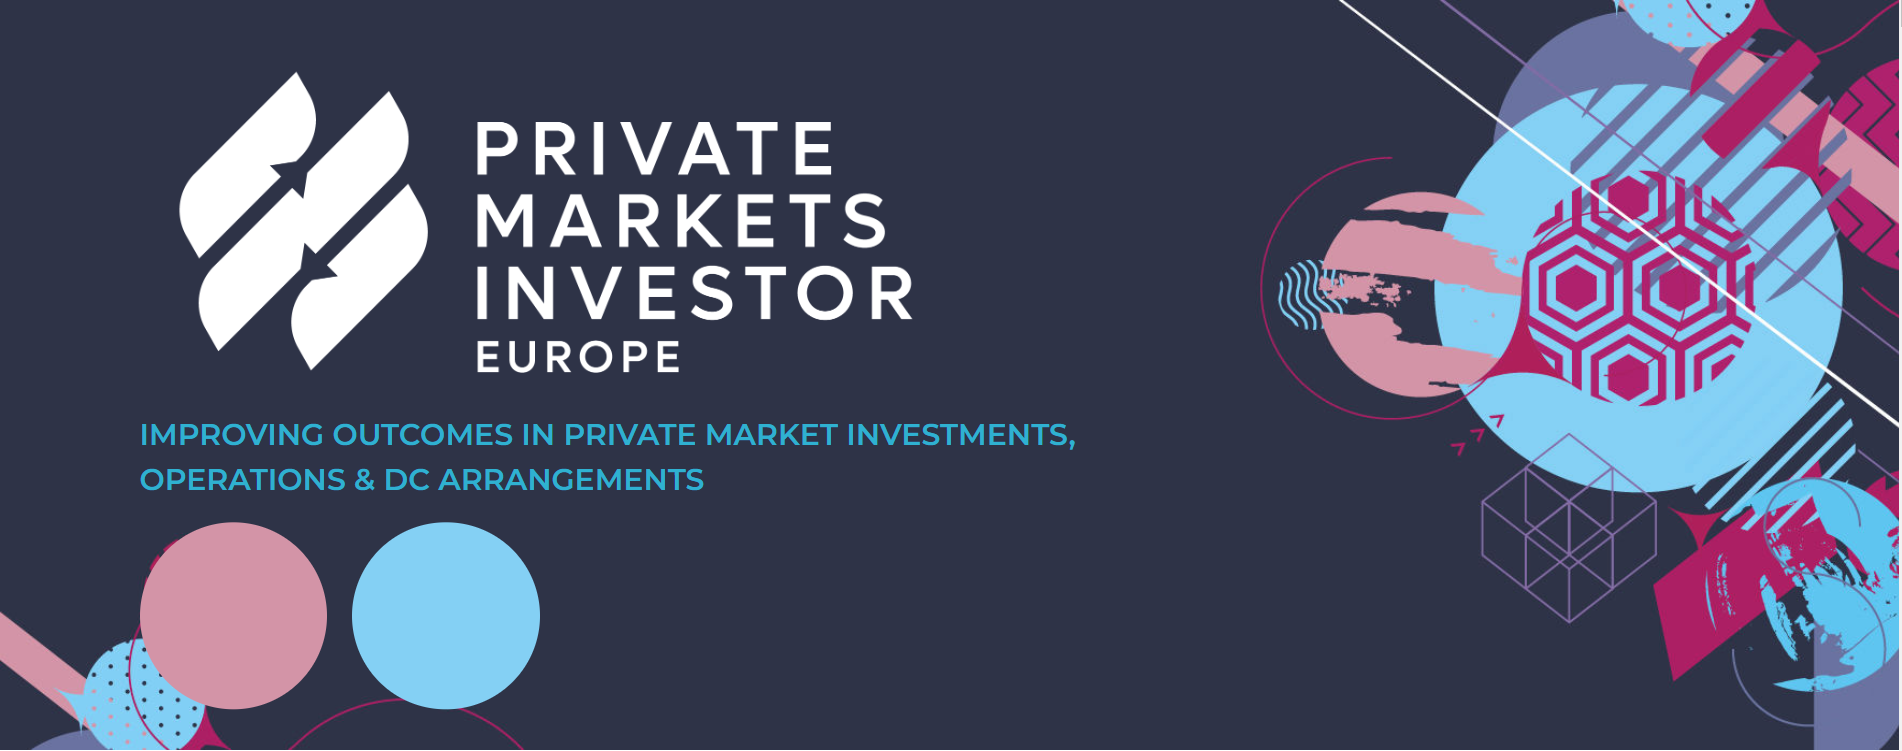 Private Markets Investor Europe